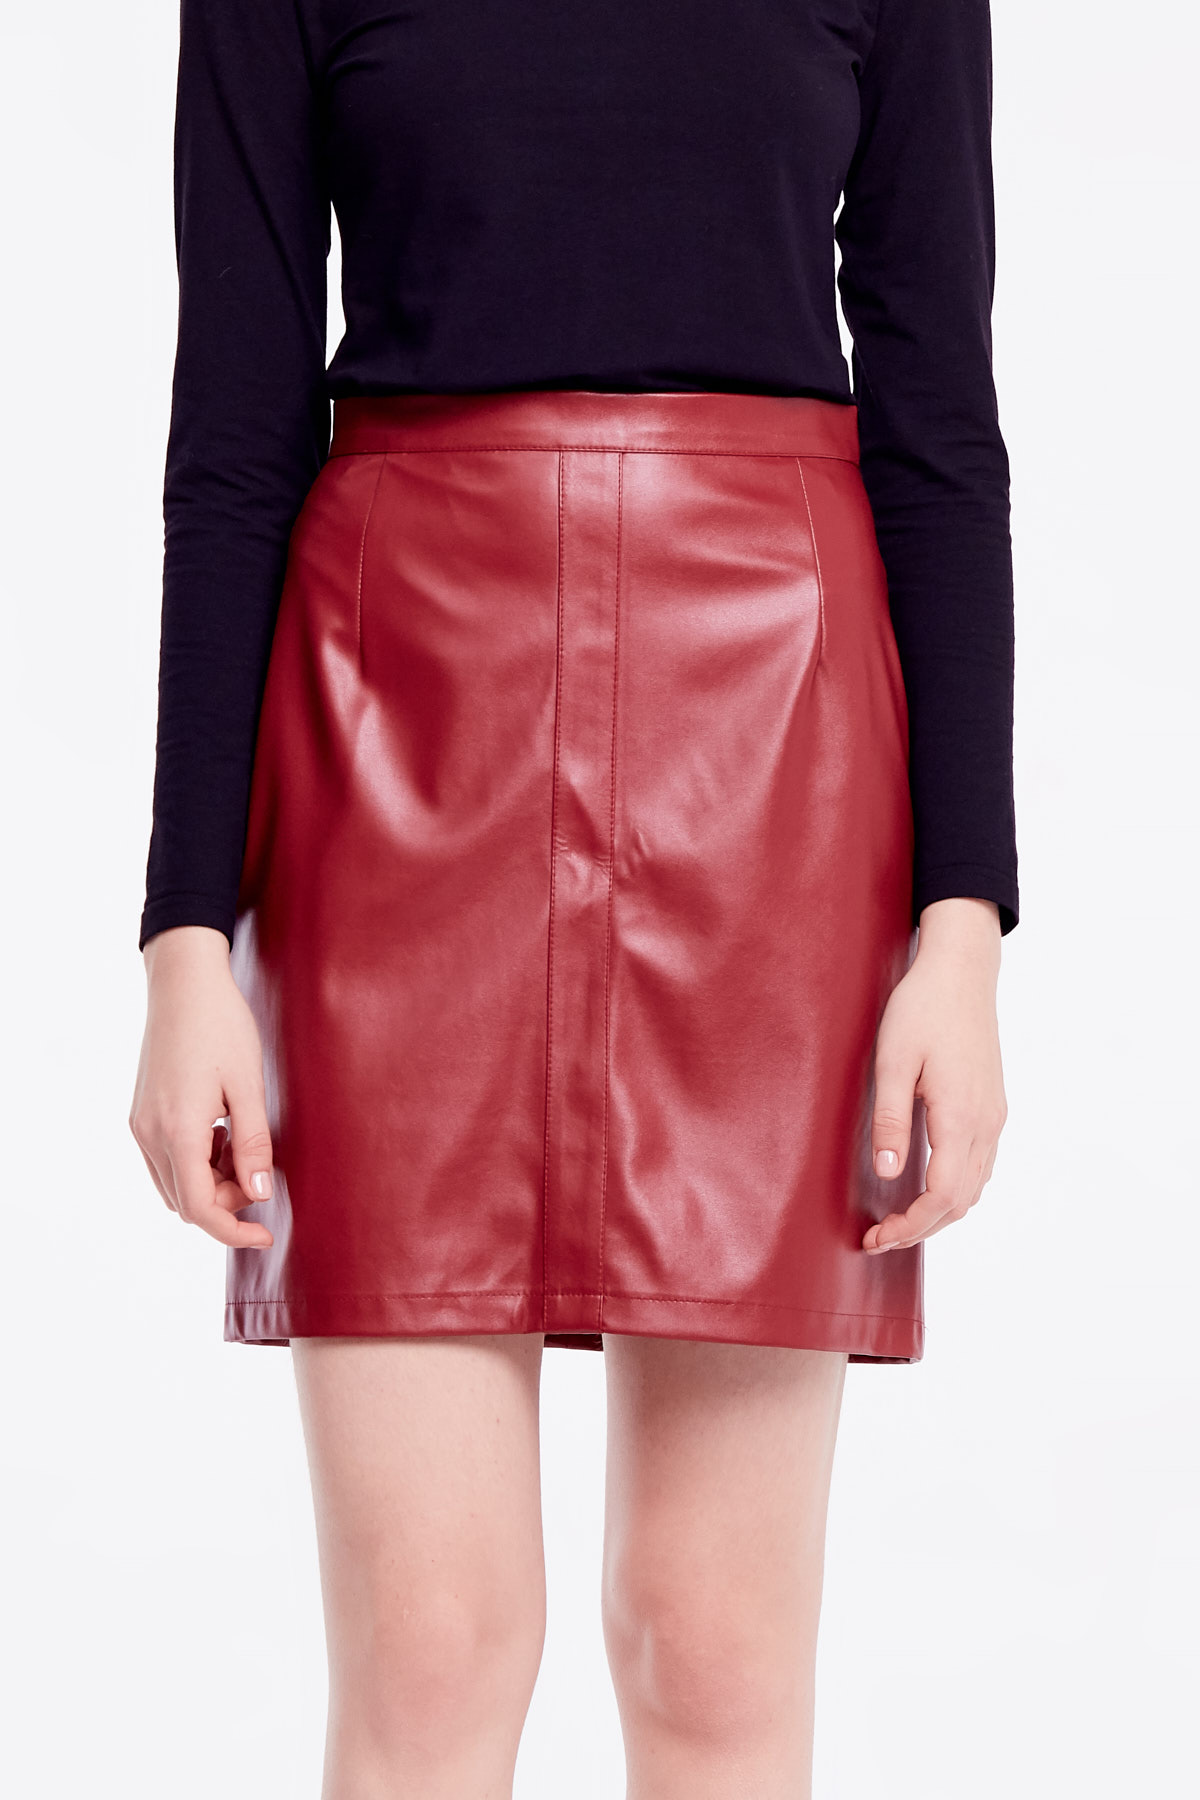 Short burgundy leather skirt, photo 1